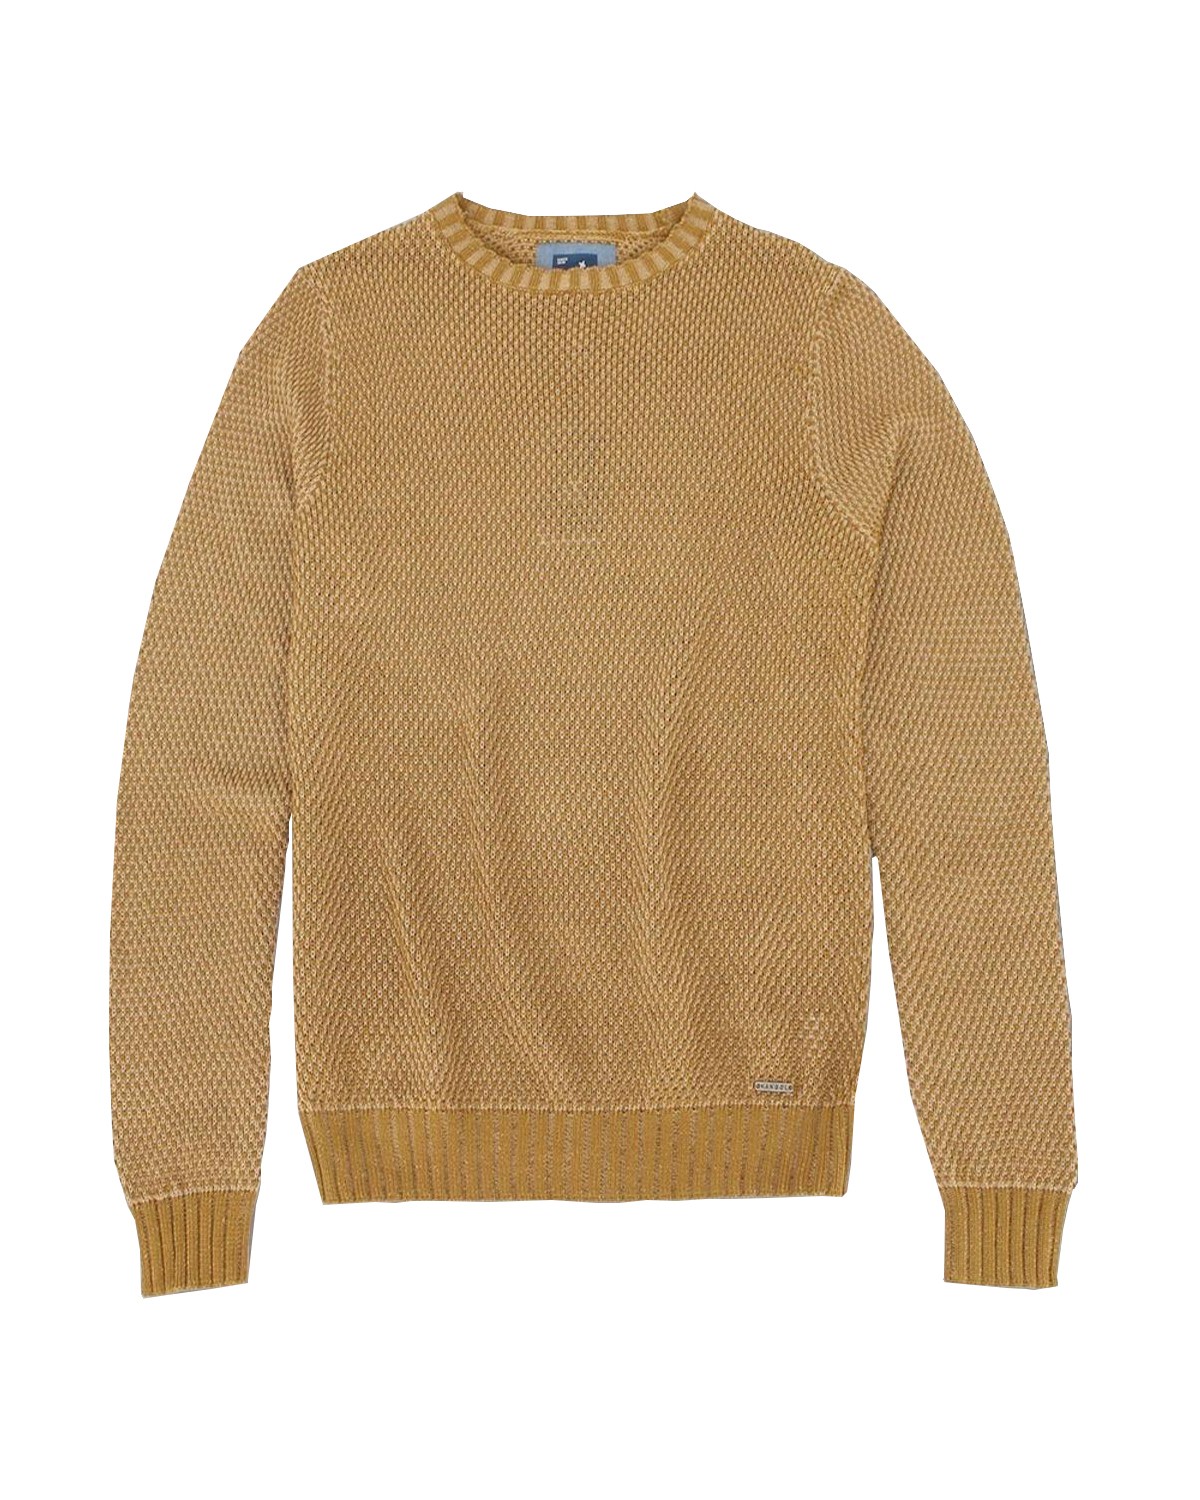 kangol K9856 Men's 7GG Cotton Acrylic Sweater - Free Shipping Available